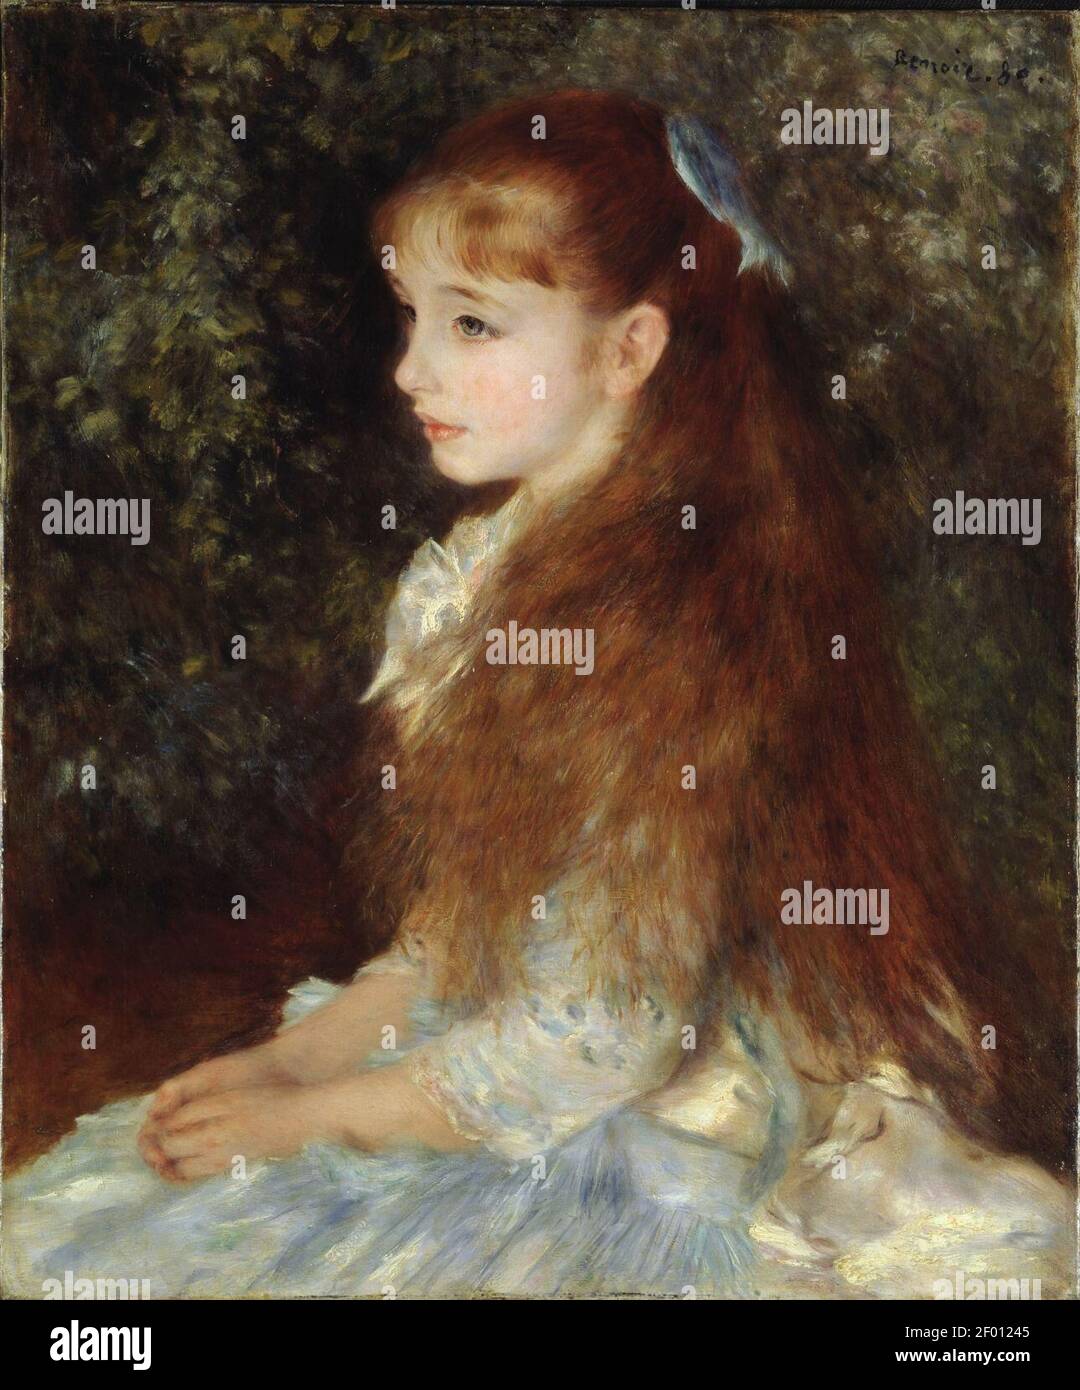 Pierre-Auguste Renoir, 1880, Portrait of Mademoiselle Irène Cahen d'Anvers, Sammlung E.G. Bührle. Stock Photo